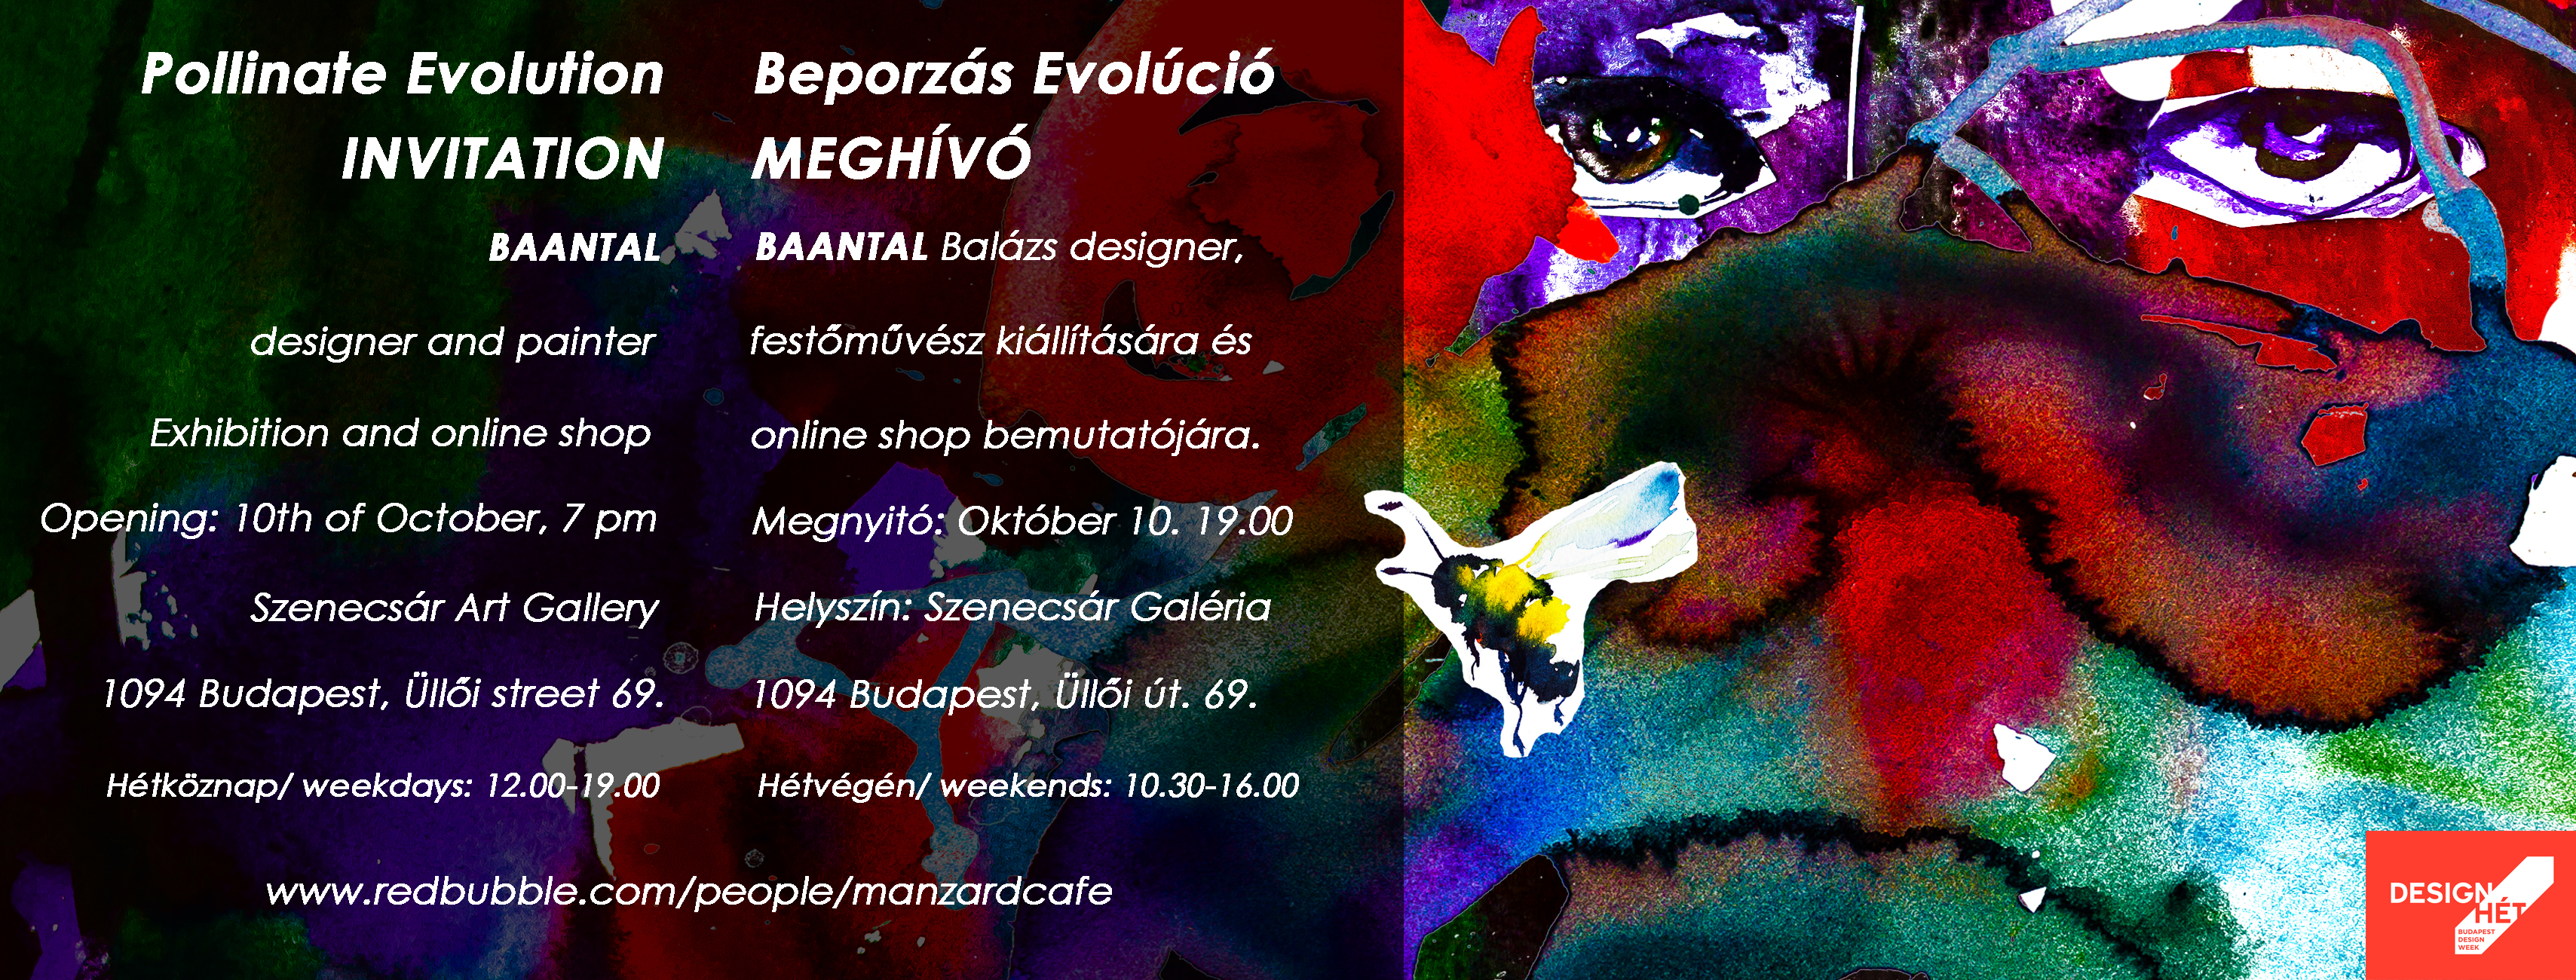 meghivo_baantal_invitation_kiallitas_exhibition_and_online_shop_1.jpg